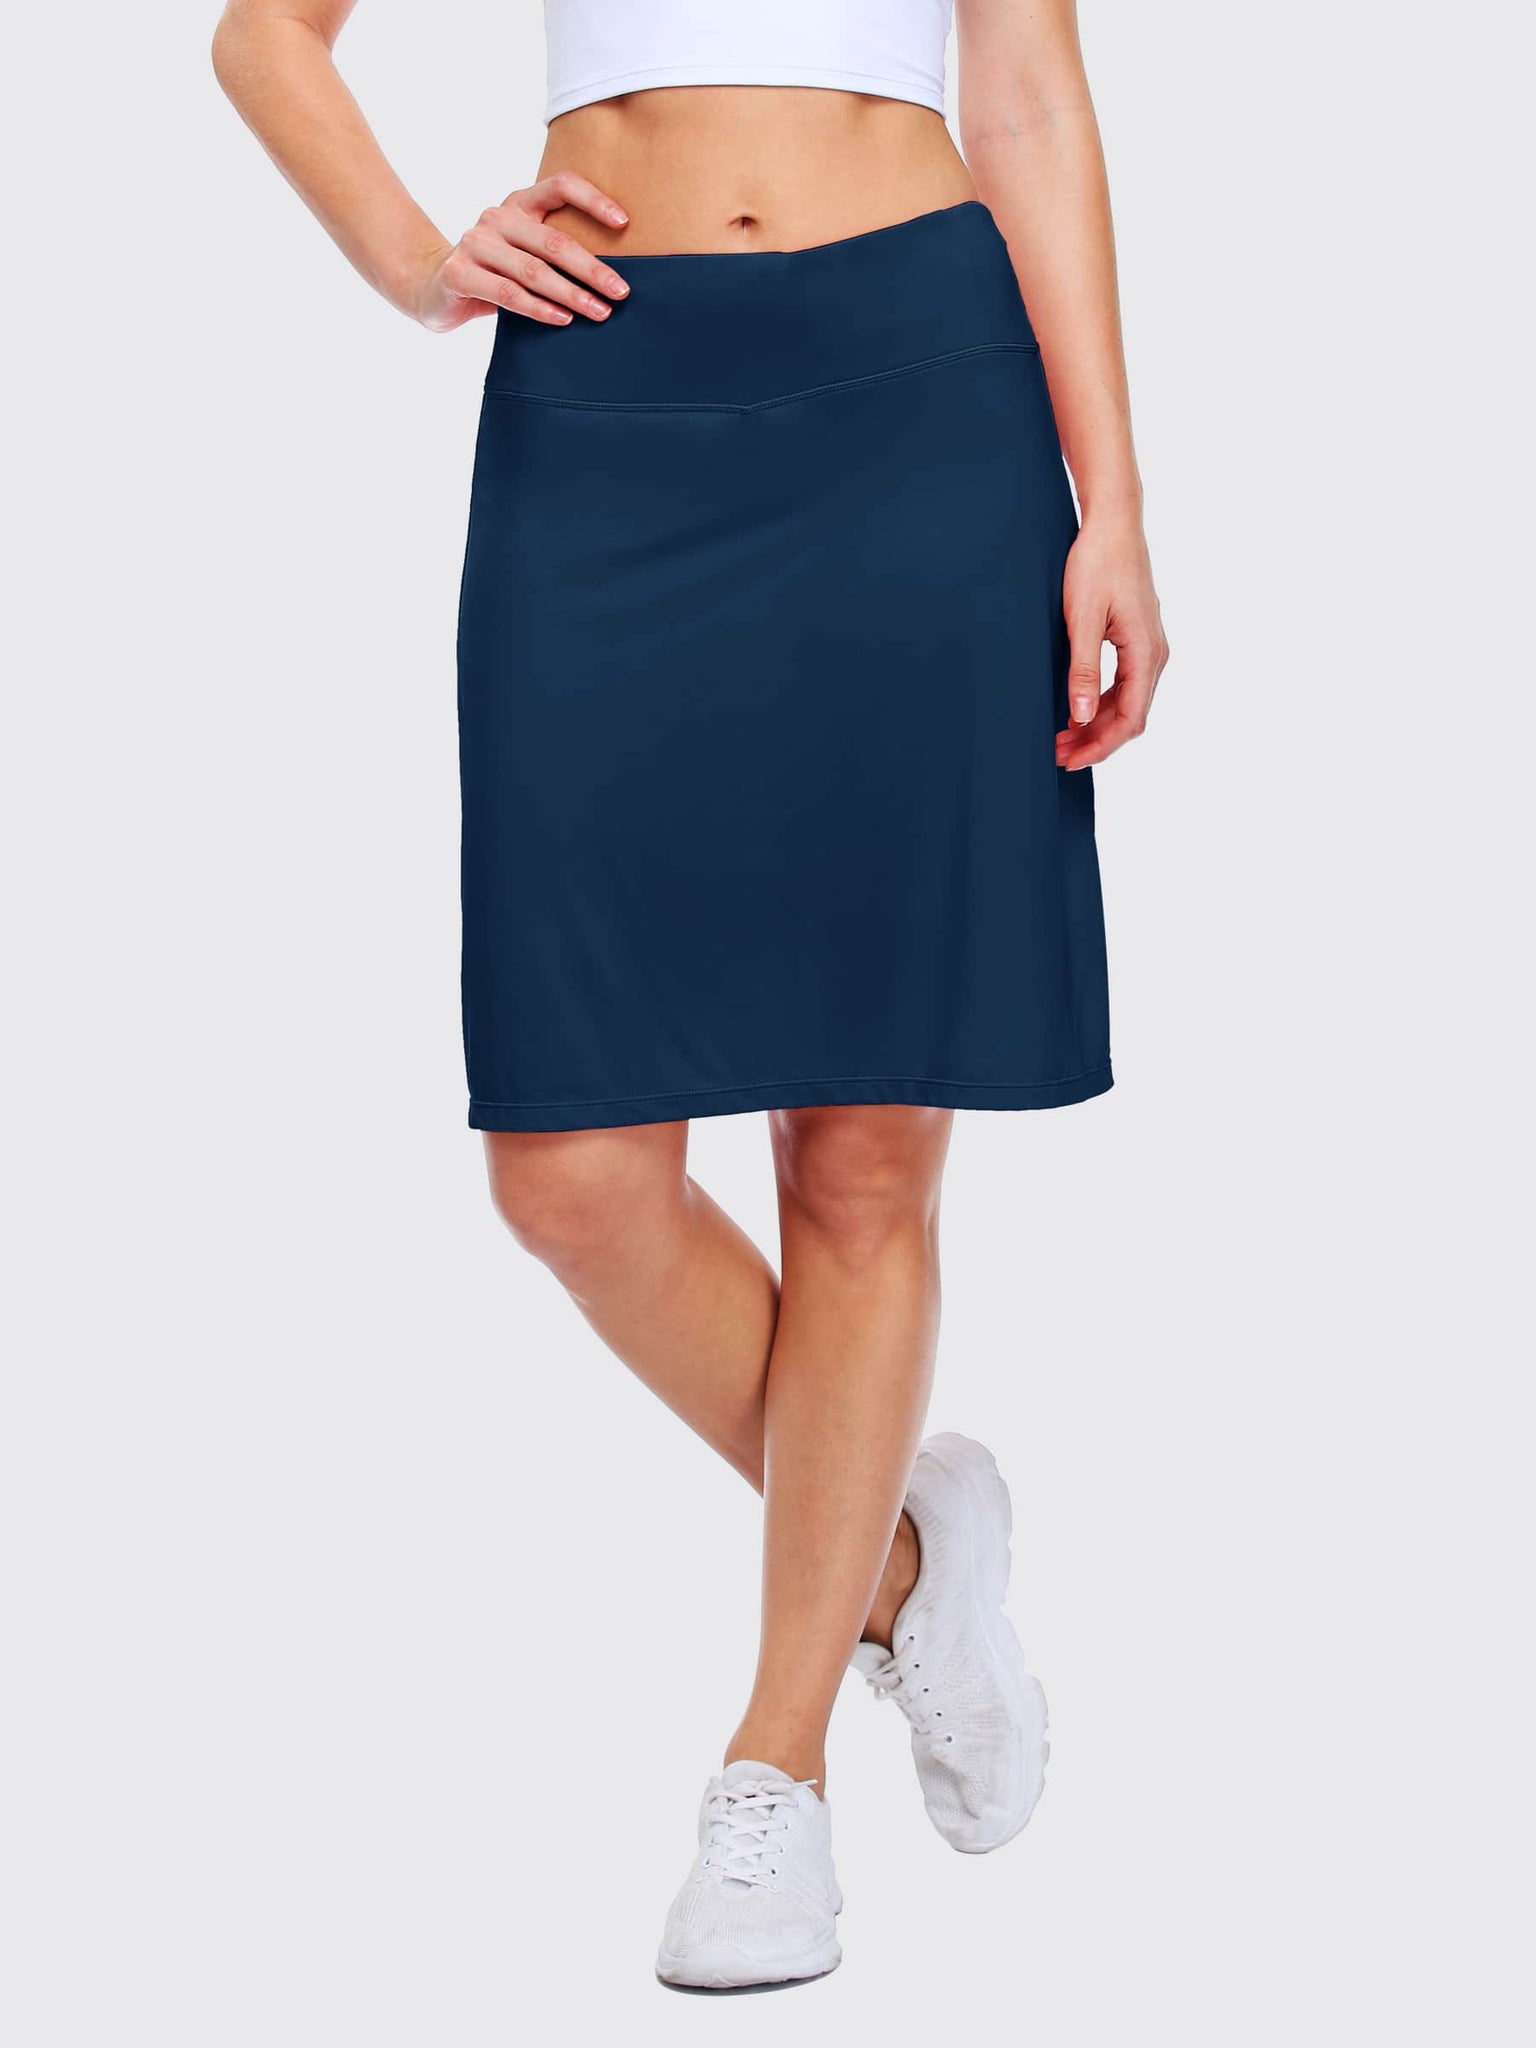 Women's Knee Length 20 Inch Sports Skorts Skirts_Navy3